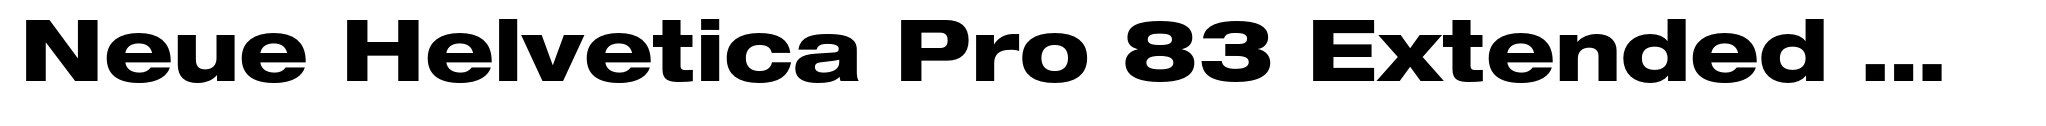 Neue Helvetica Pro 83 Extended Heavy image